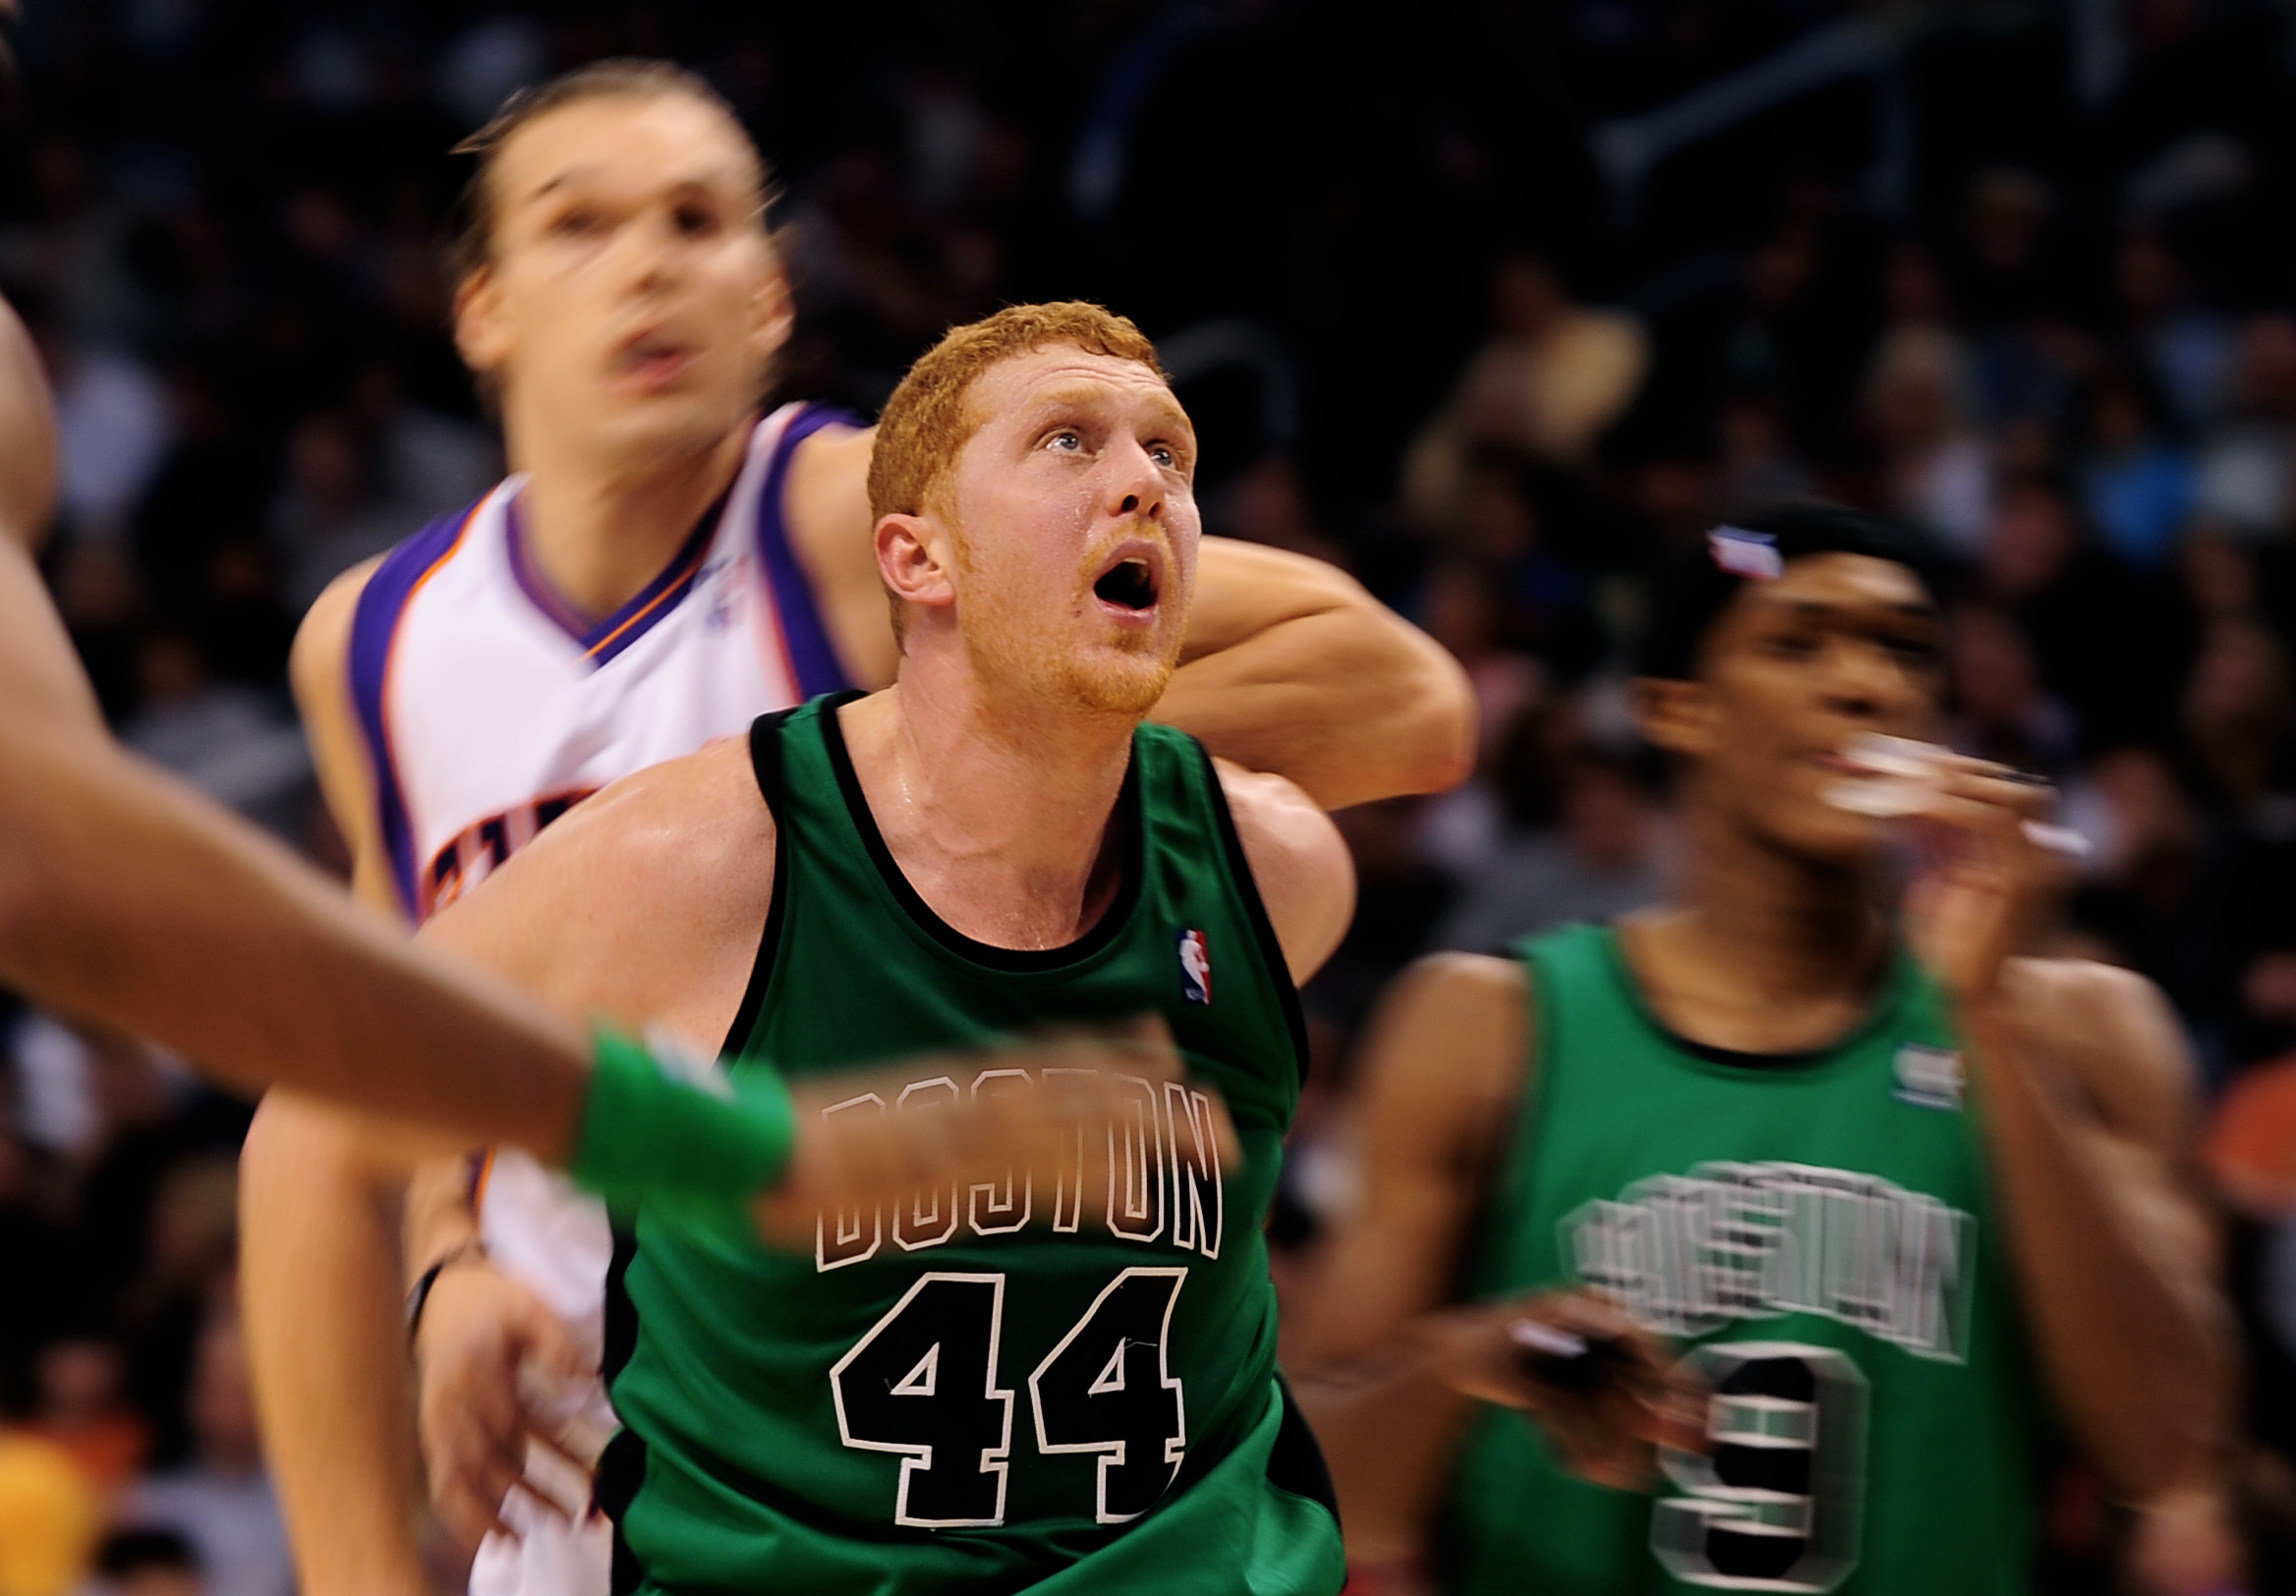 Celtics on NBC Sports Boston on X: June 2, 2008 - Leon Powe